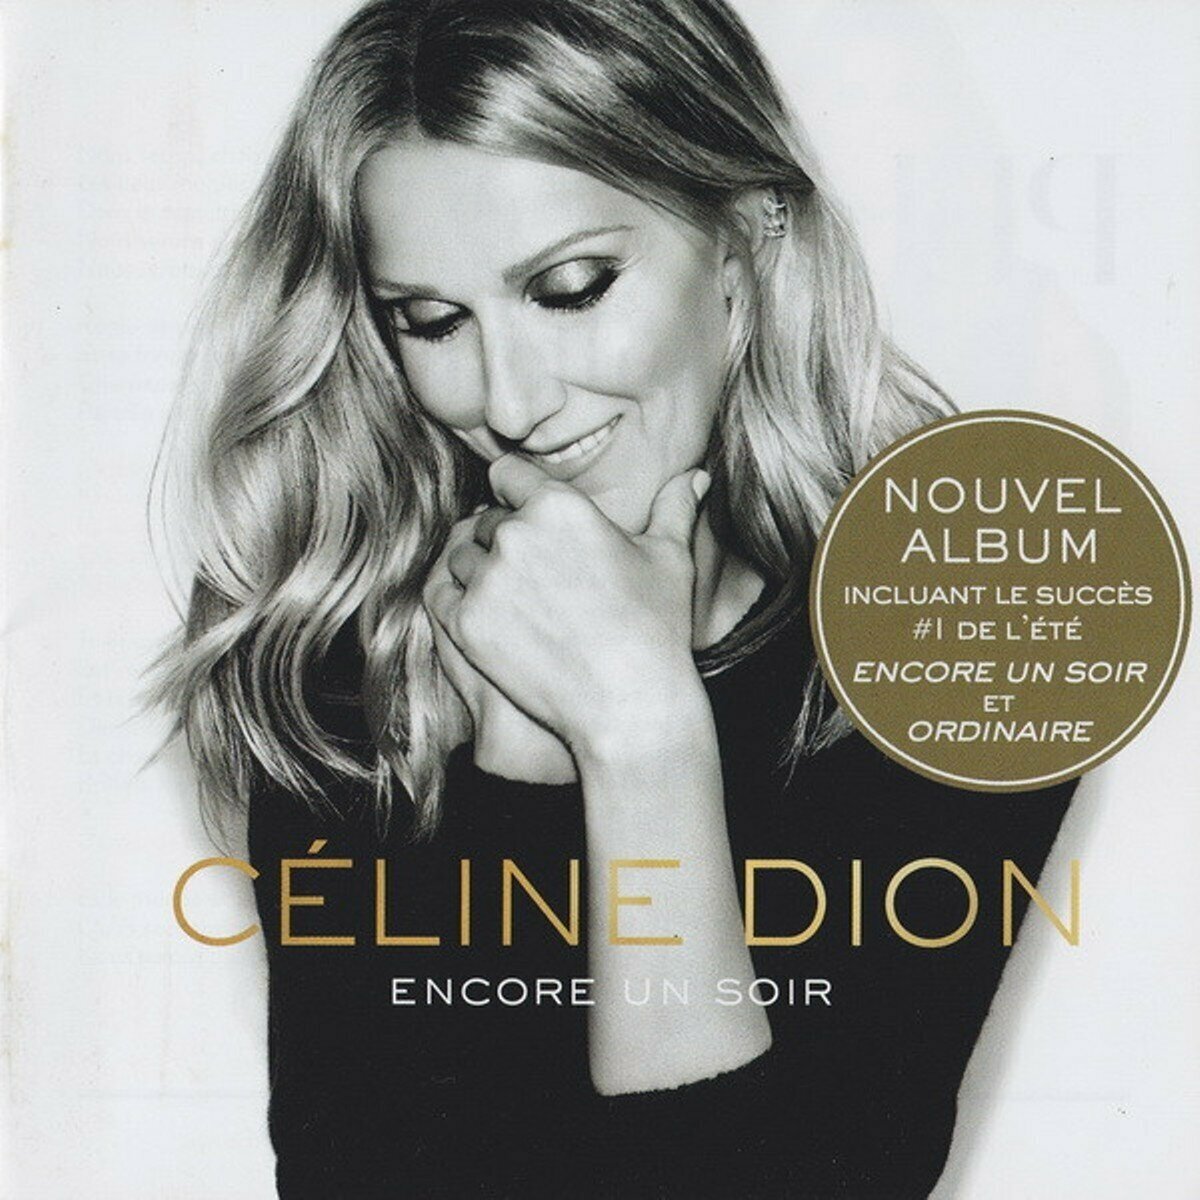 Celine Dion Encore un soir (CD) Warner Music Russia